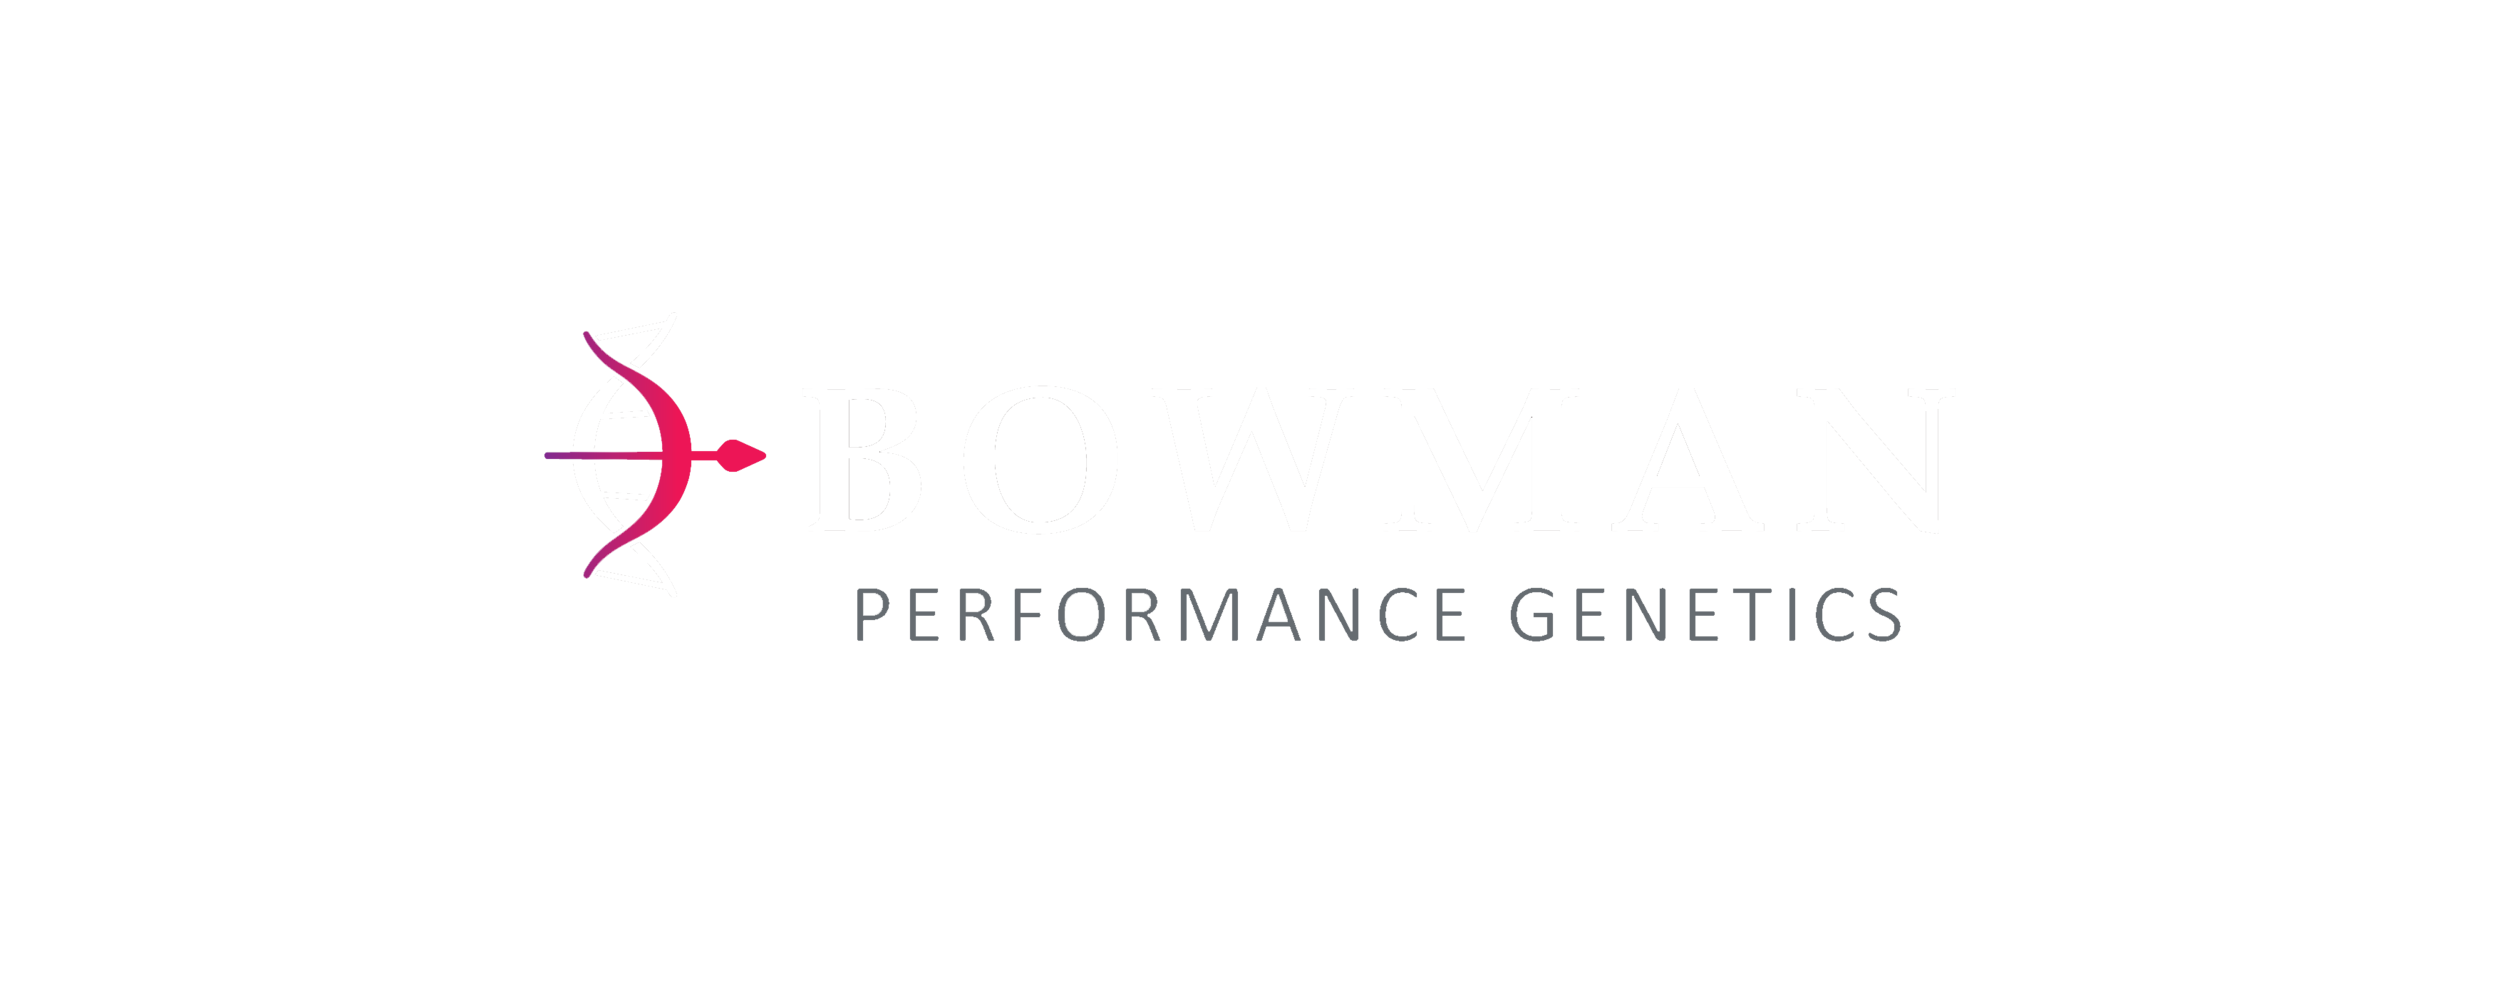 Bowman Performance Genetics